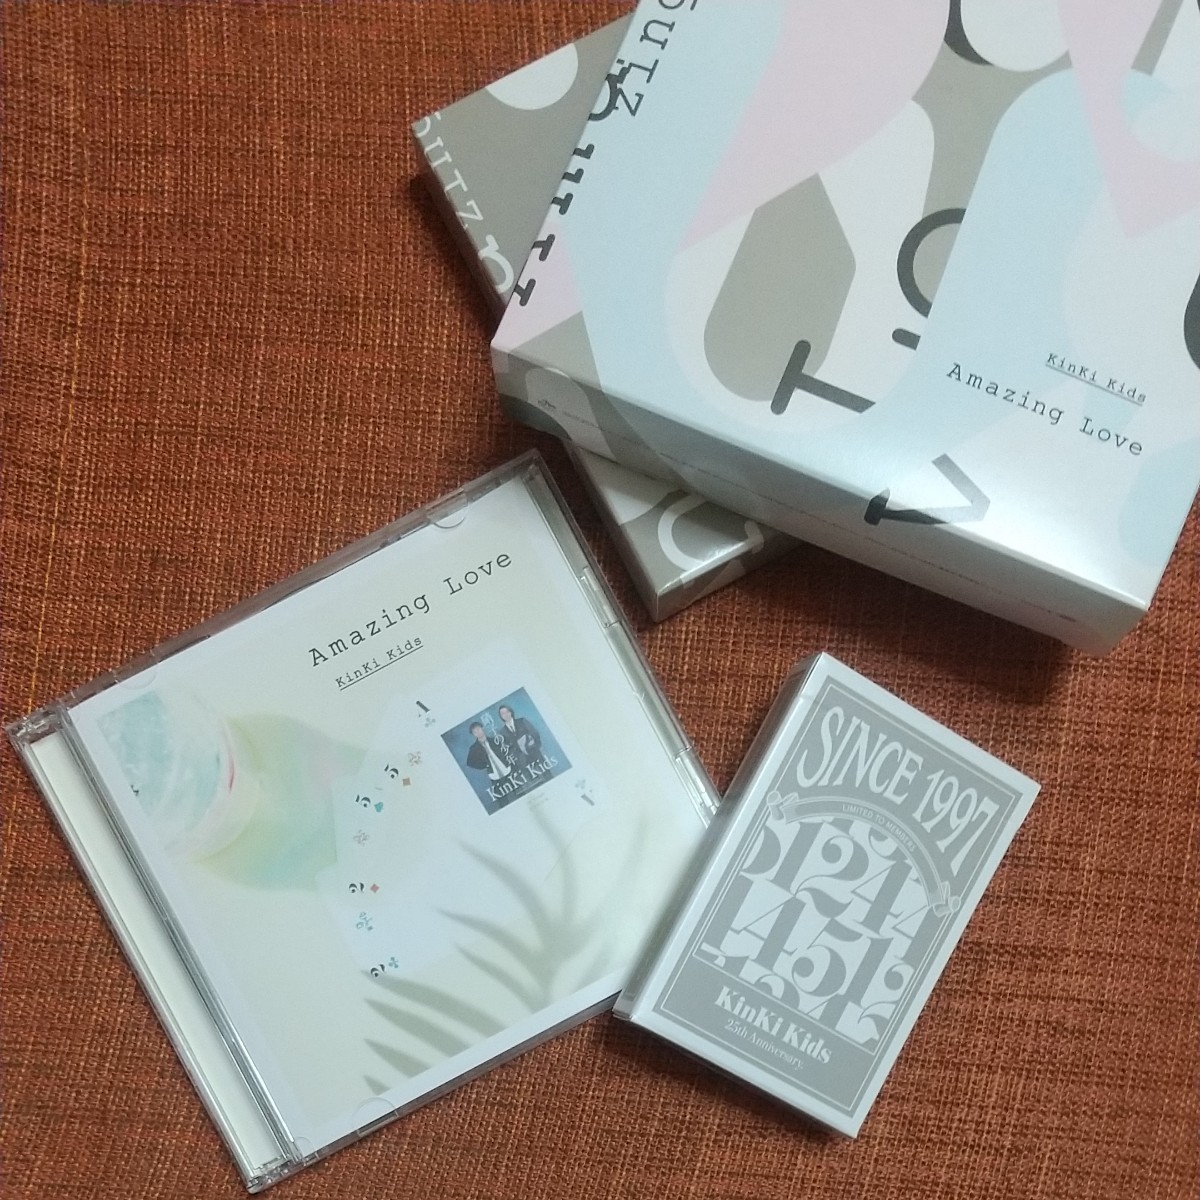 KinKi Kidsファンクラブ会員限定「Amazing Love」販売CD+DVD+トランプ